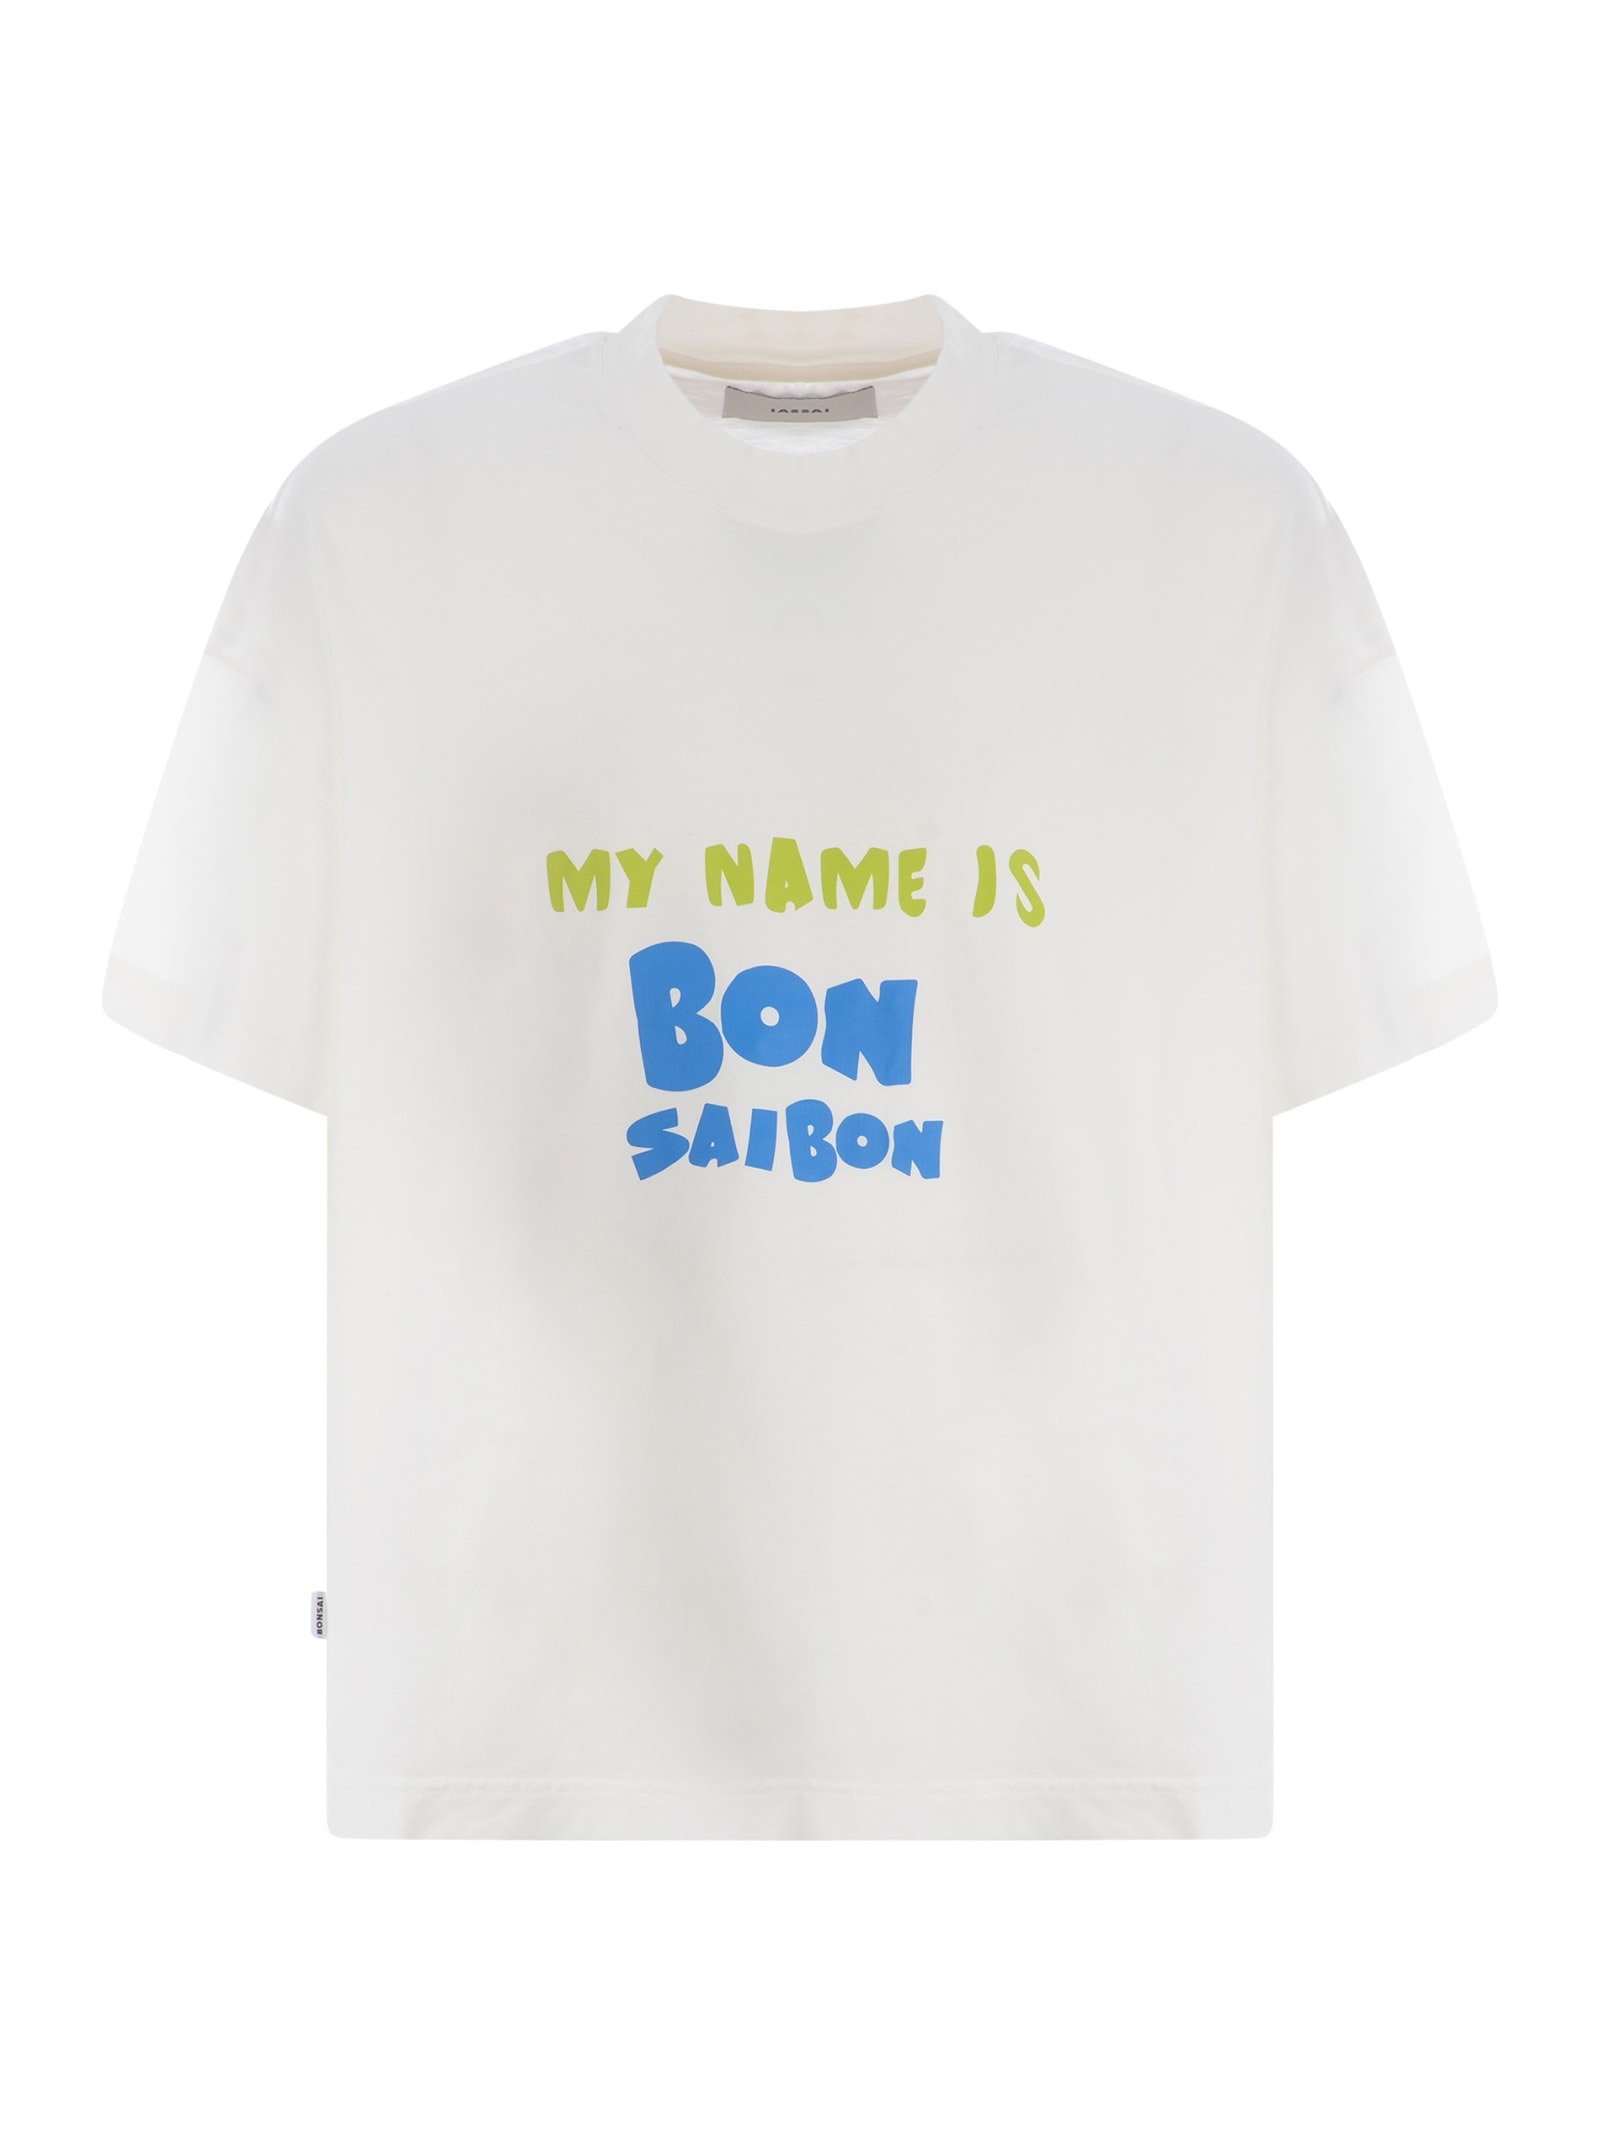 Bonsai T-shirt Bonsai saibon In Cotton